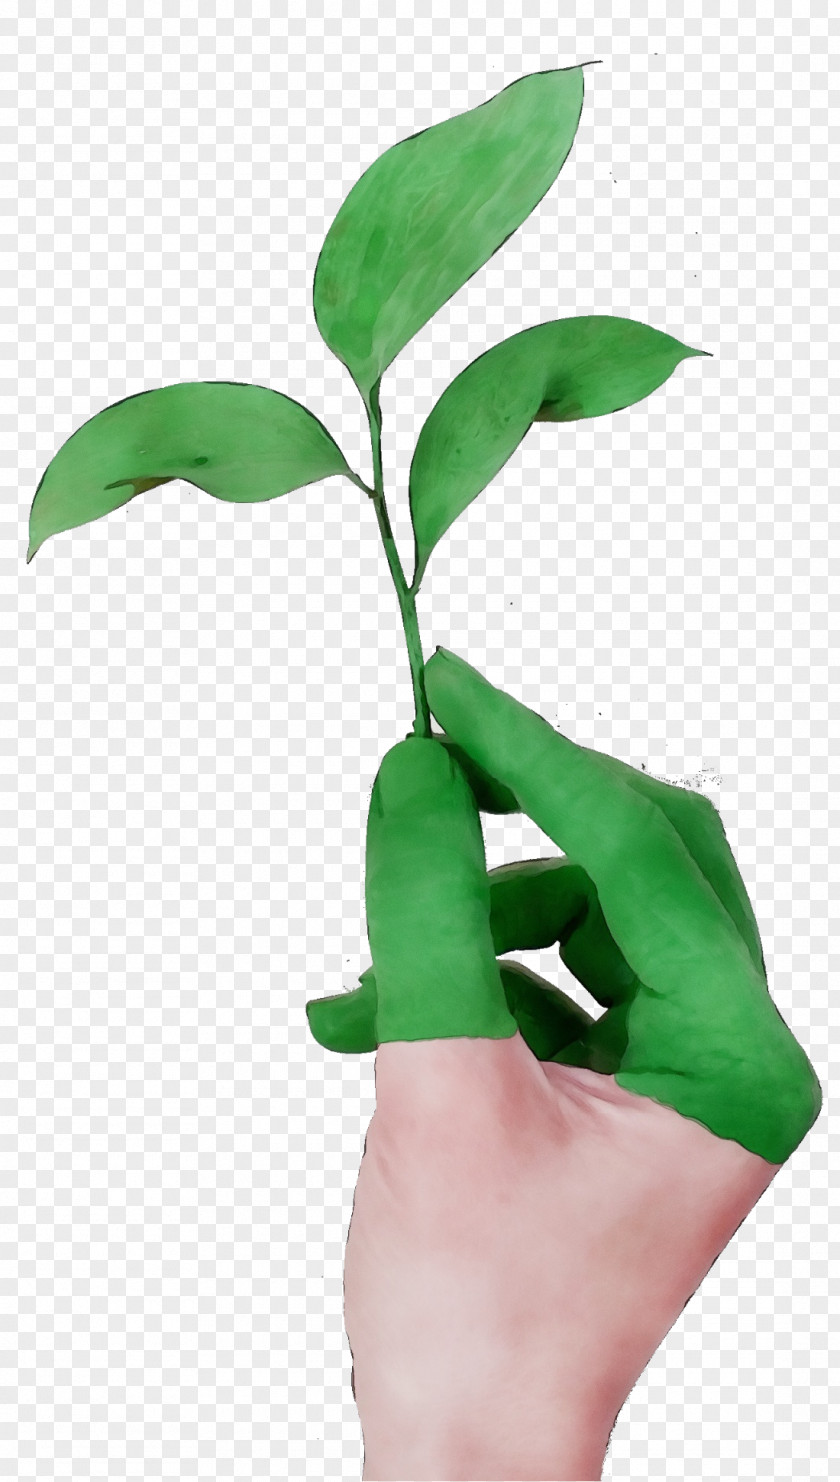 Houseplant Plant Stem Leaf Green Flower Hand PNG